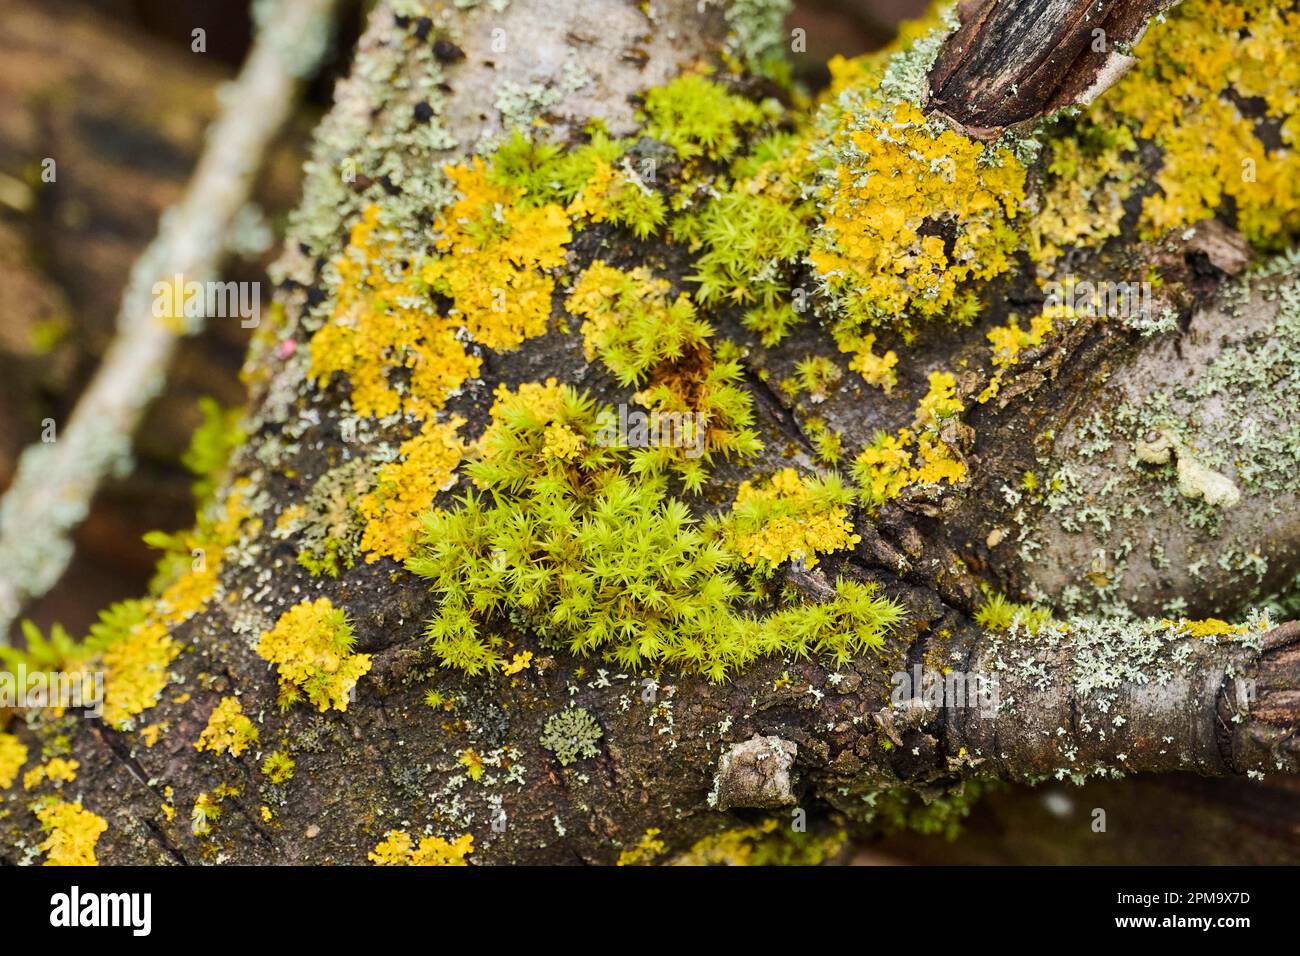 Horn calcareous moss (Mnium hornum) growing on a wood, Bavaria, Germany Stock Photo